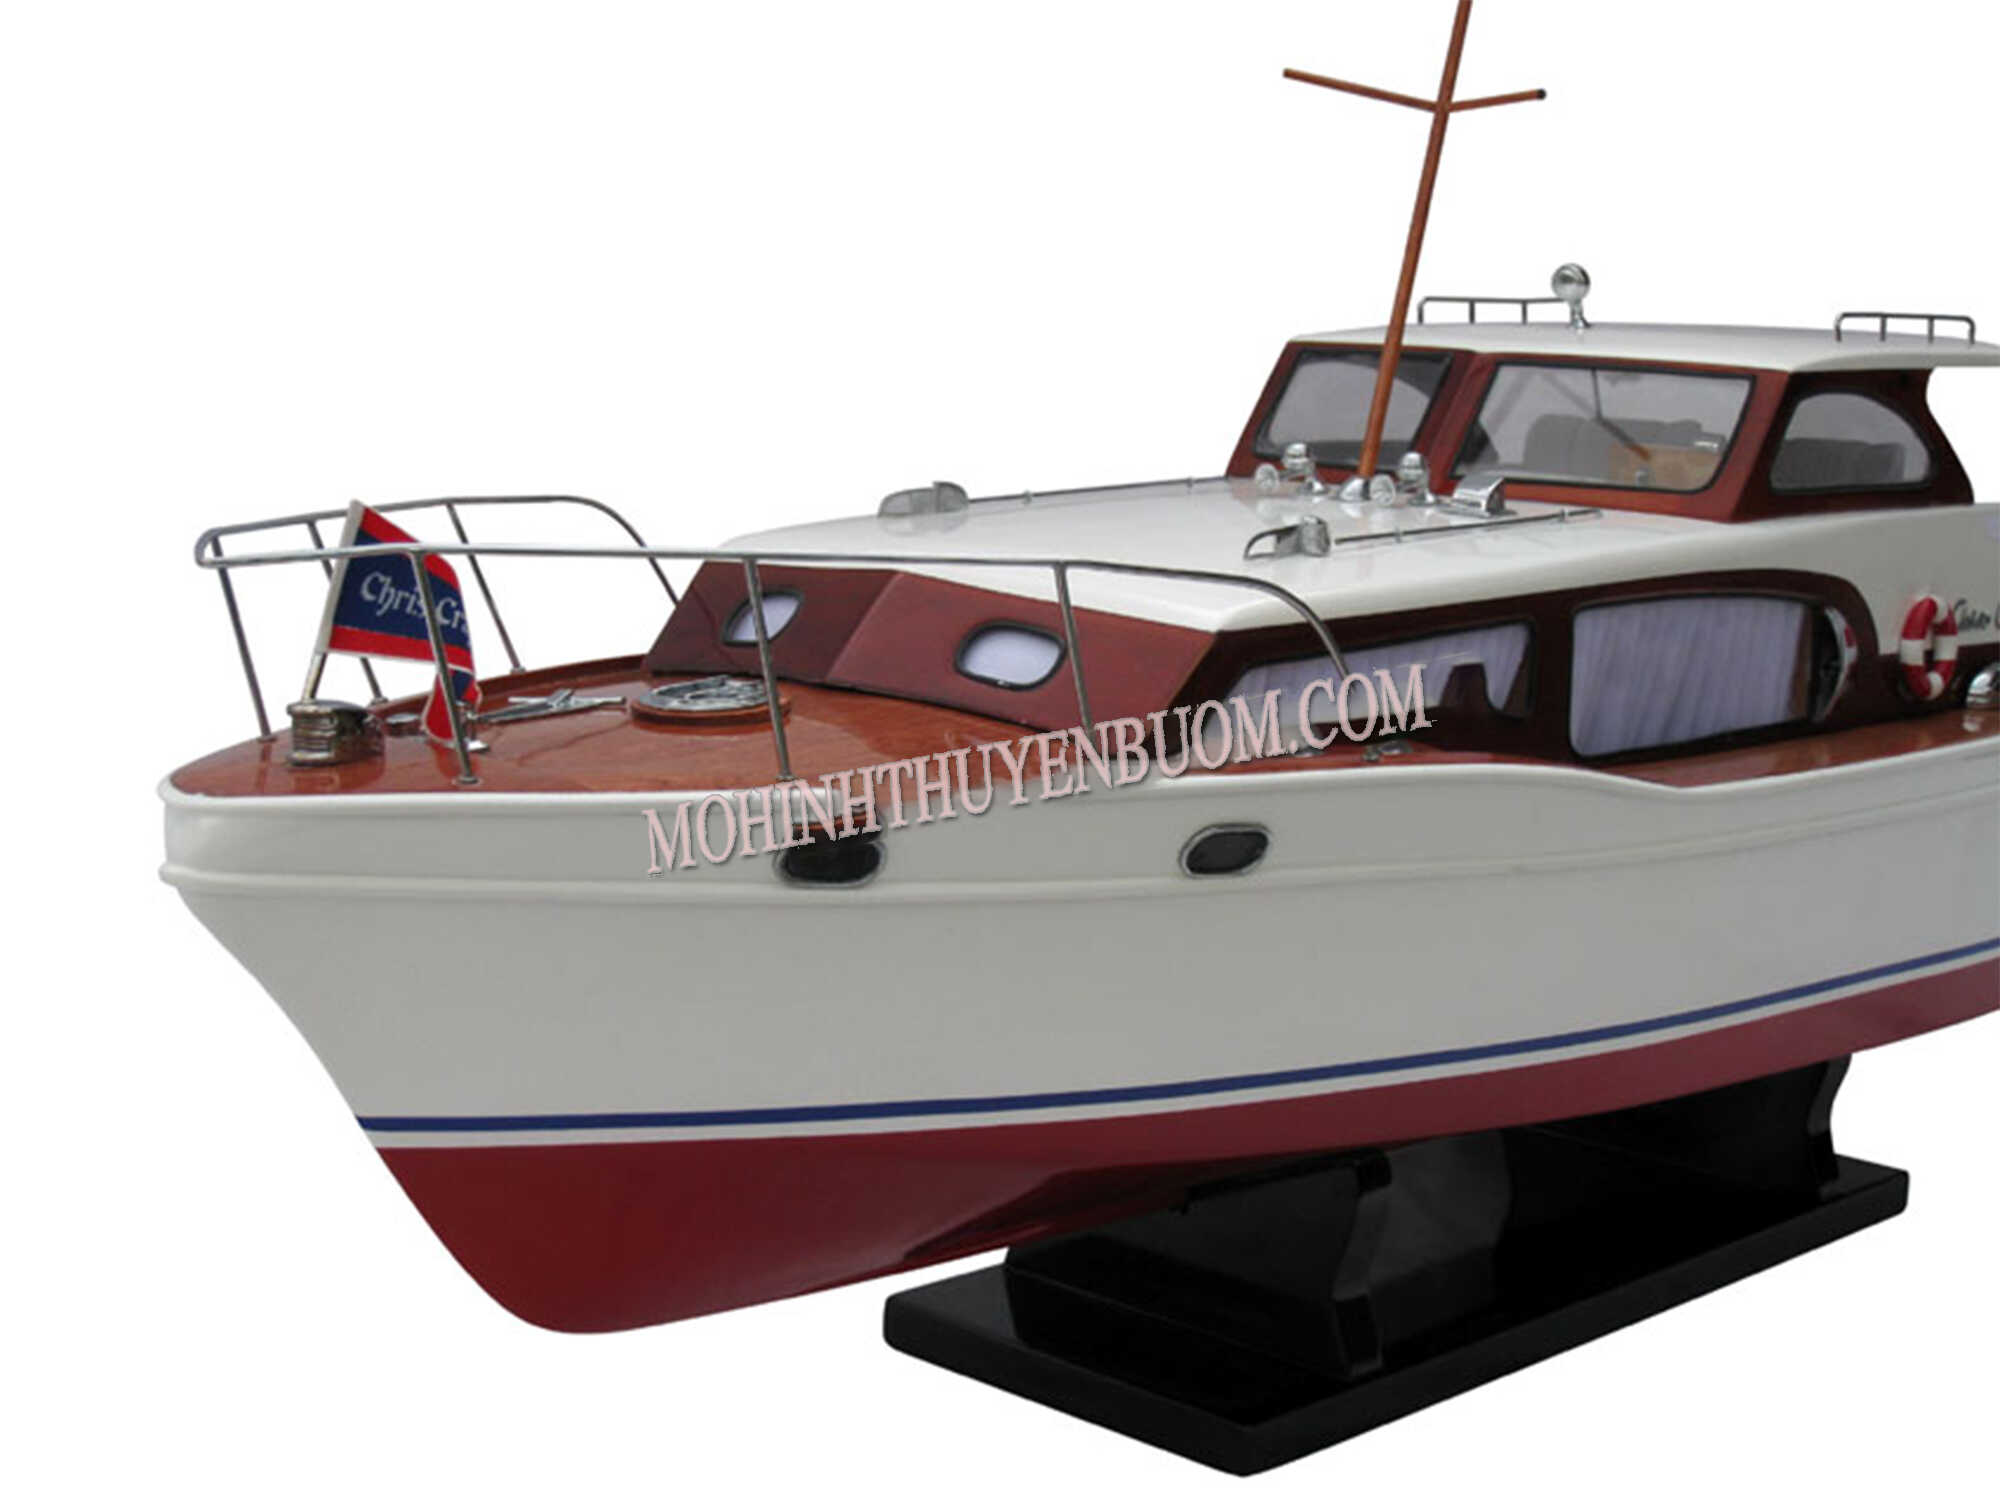 Chris Craft Cabin Cruiser Speed Boat Model 37"